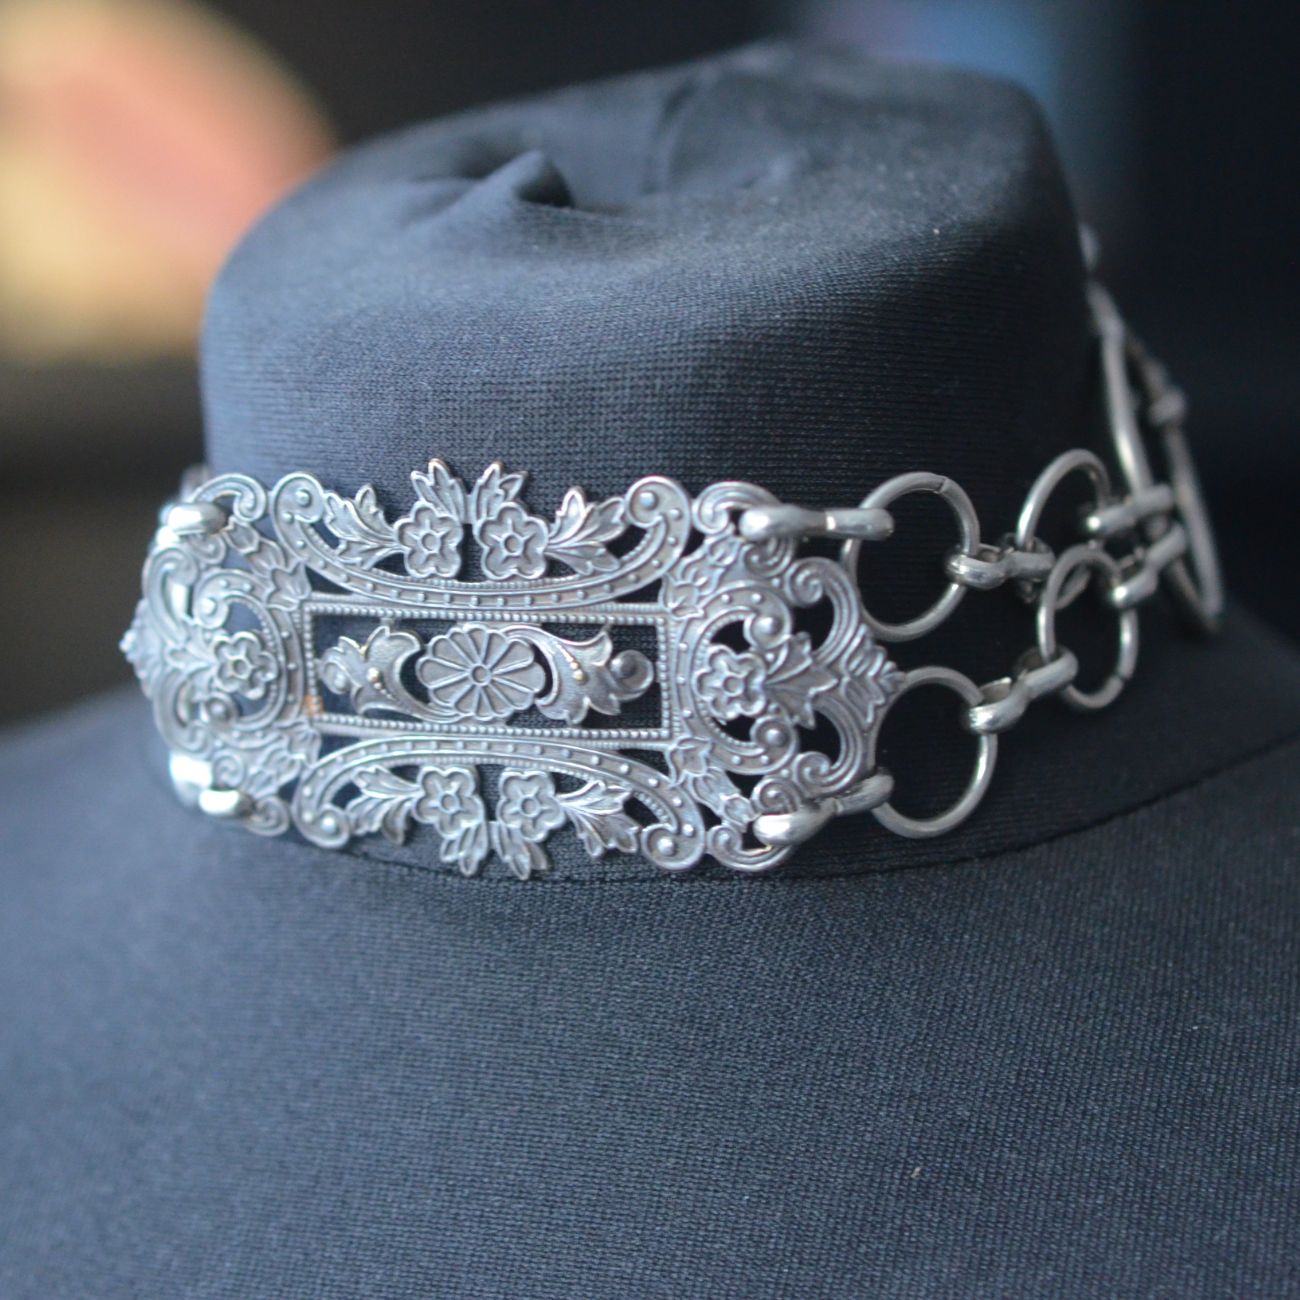 Ornate Vintage Reworked Choker Necklace